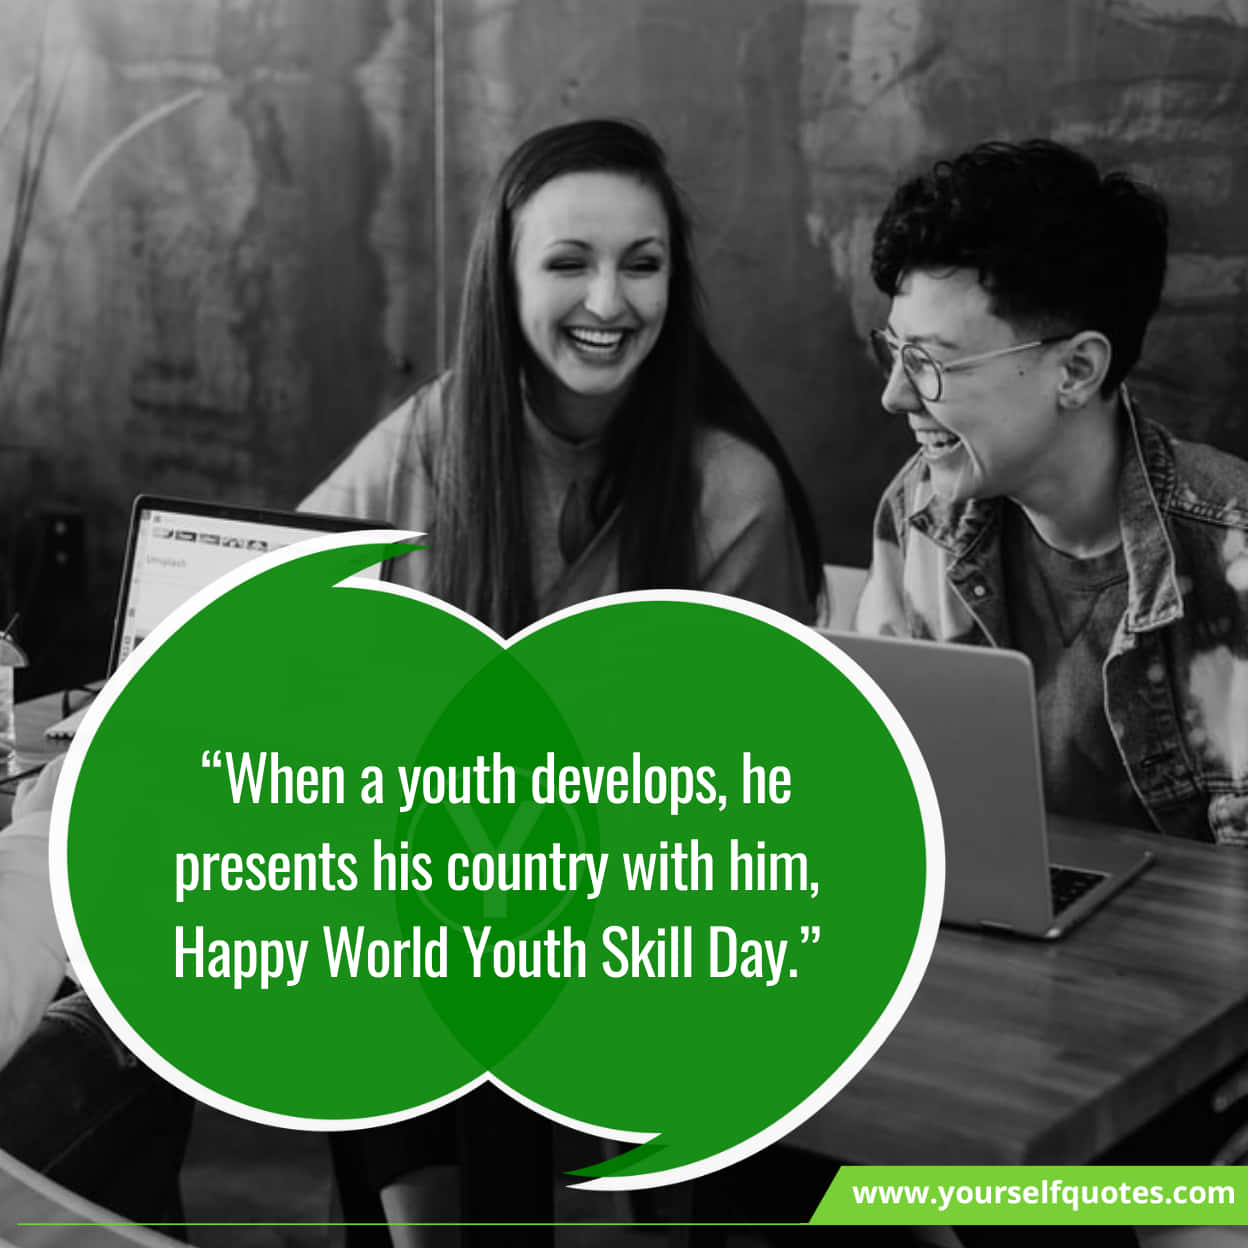 World Youth Skills Day Best Wishes